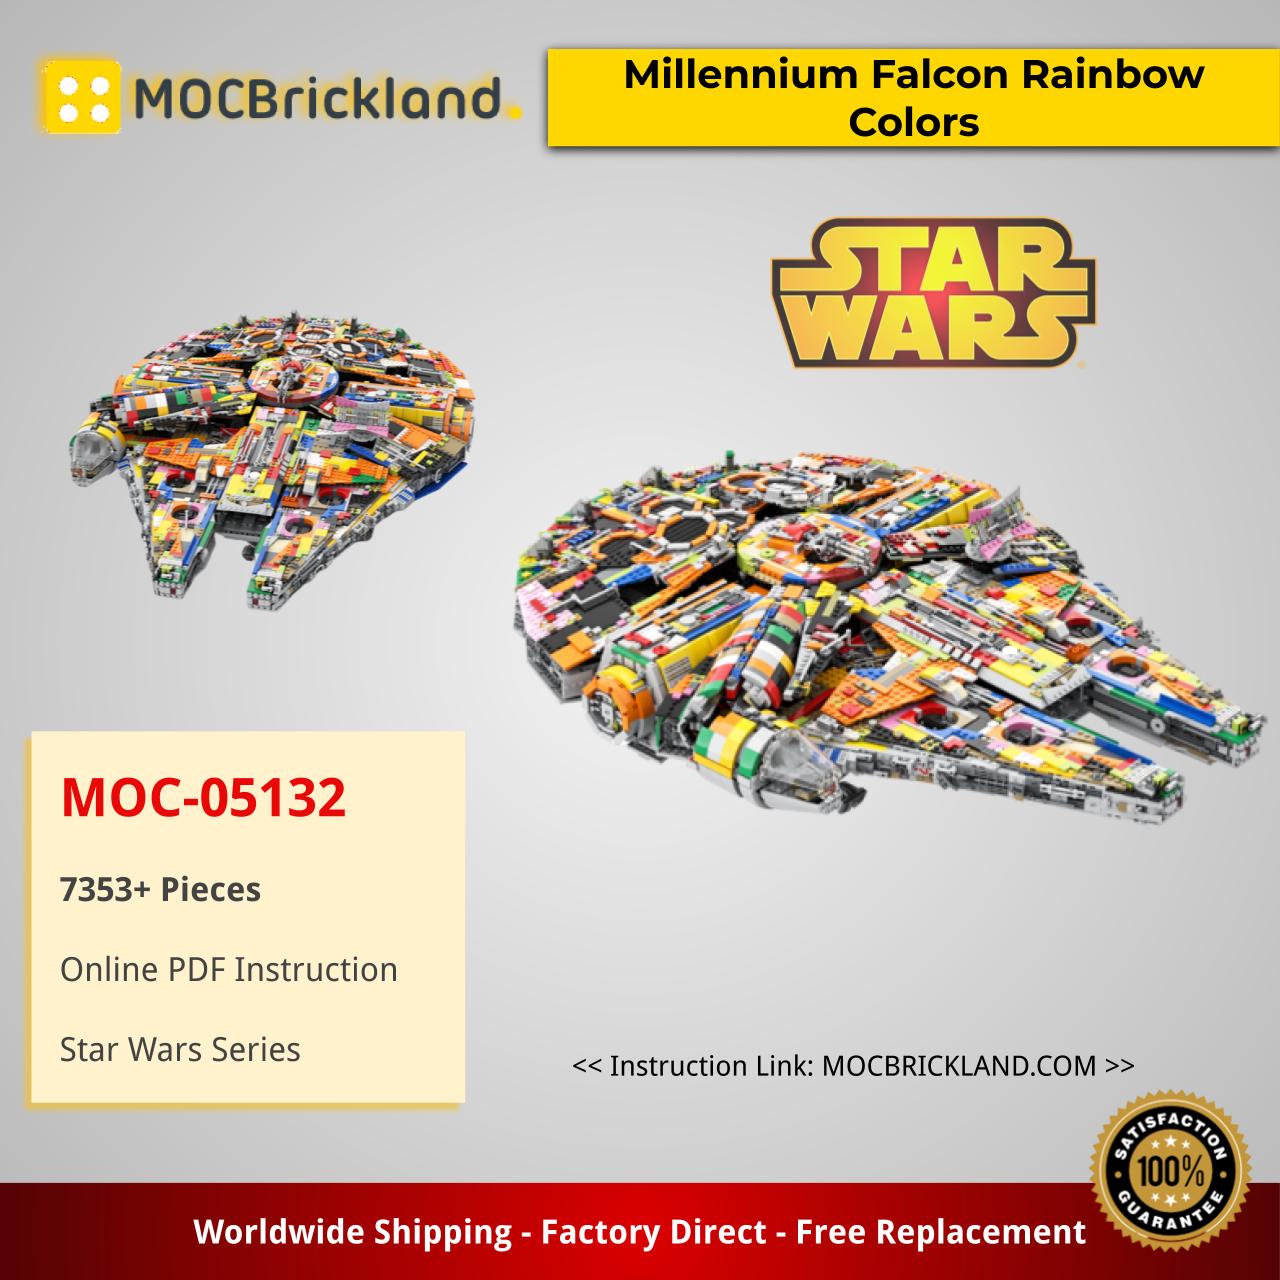 STAR WARS MOC 05132 Millennium Falcon Rainbow Colors